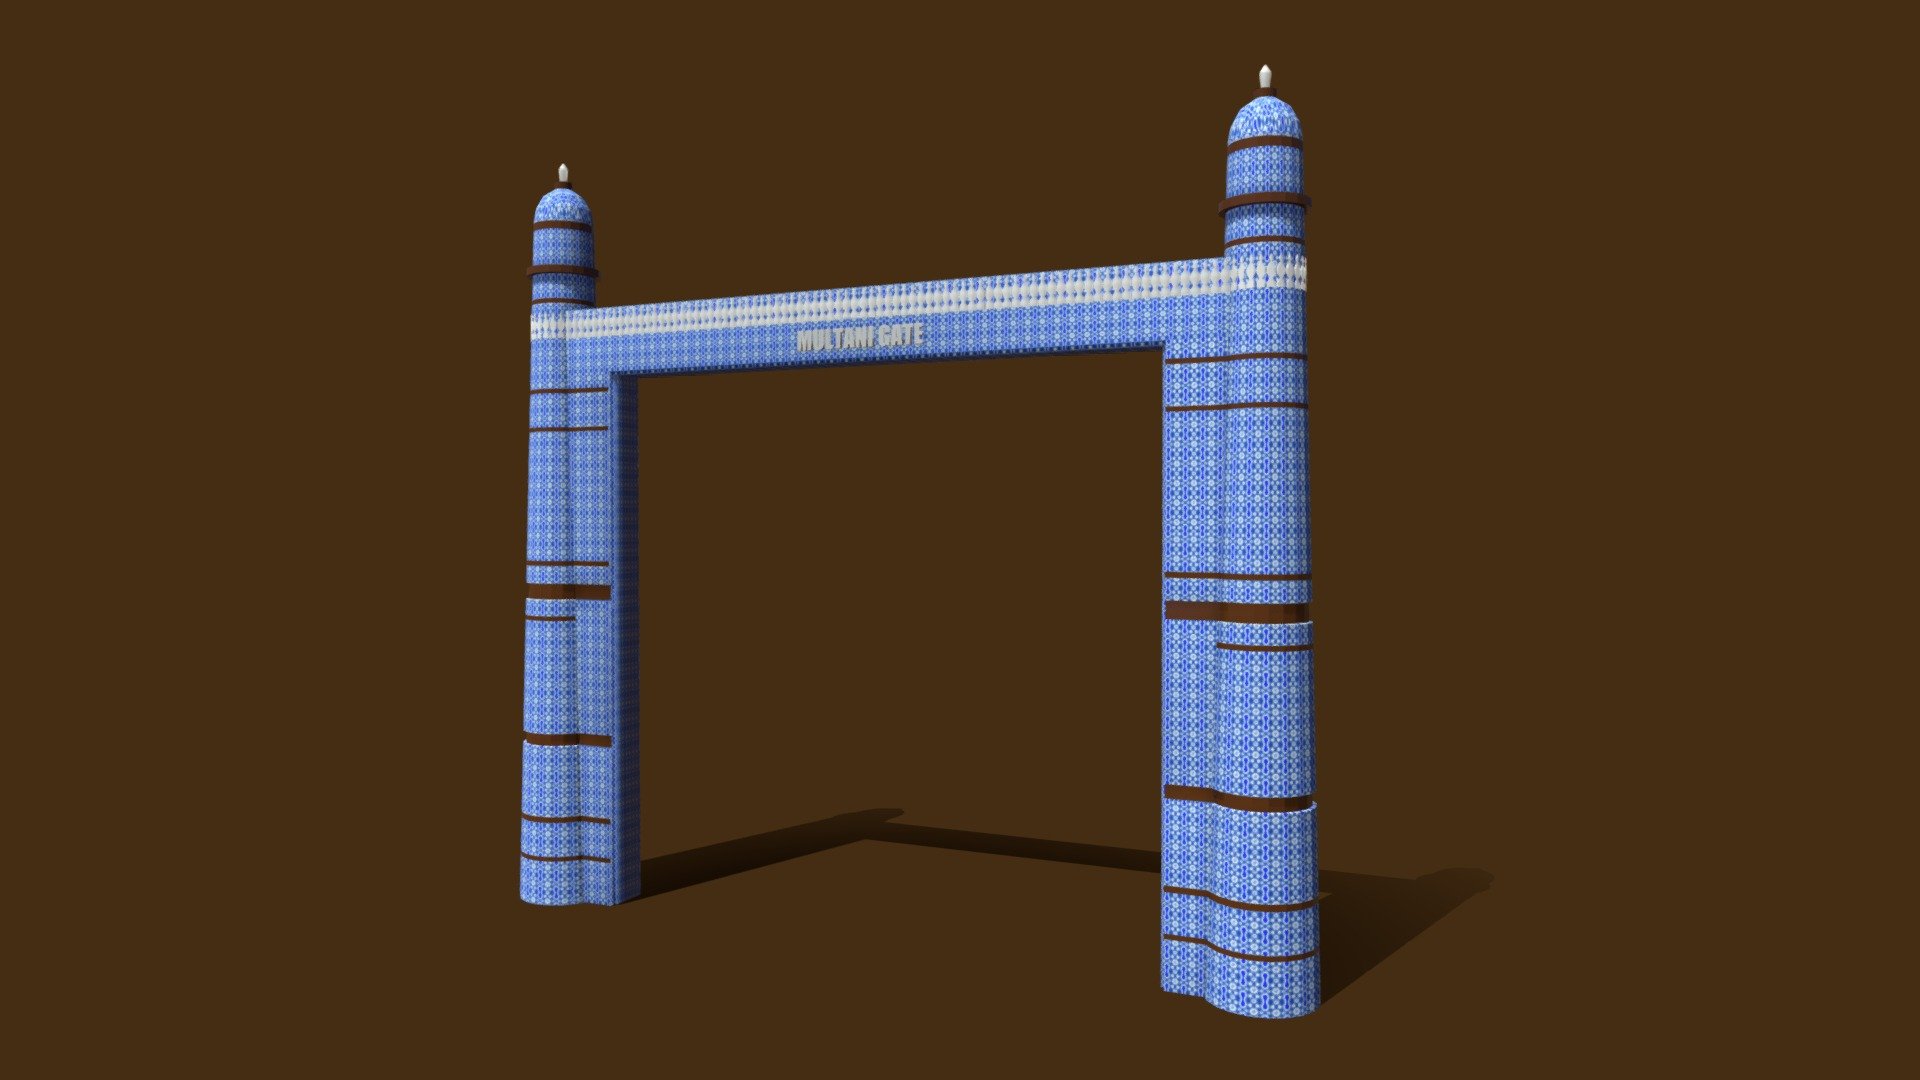 Multani Gate Bahawalpur - Lowpoly - Multani Gate Bahawalpur Lowpoly - 3D model by nabeelashrafphotography 3d model